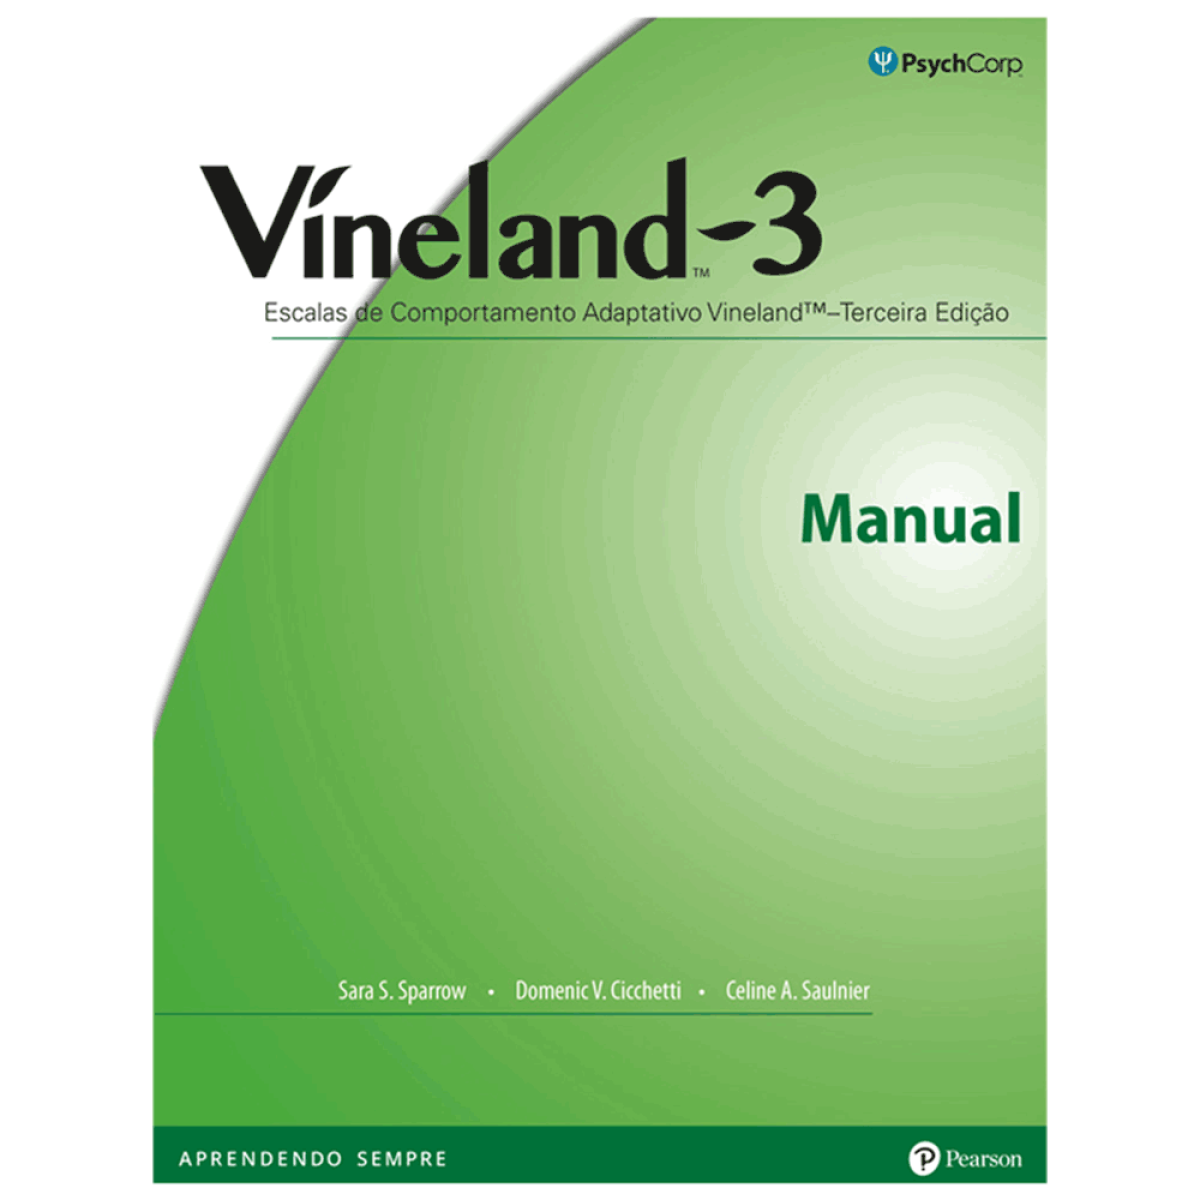 Víneland 3 Manual